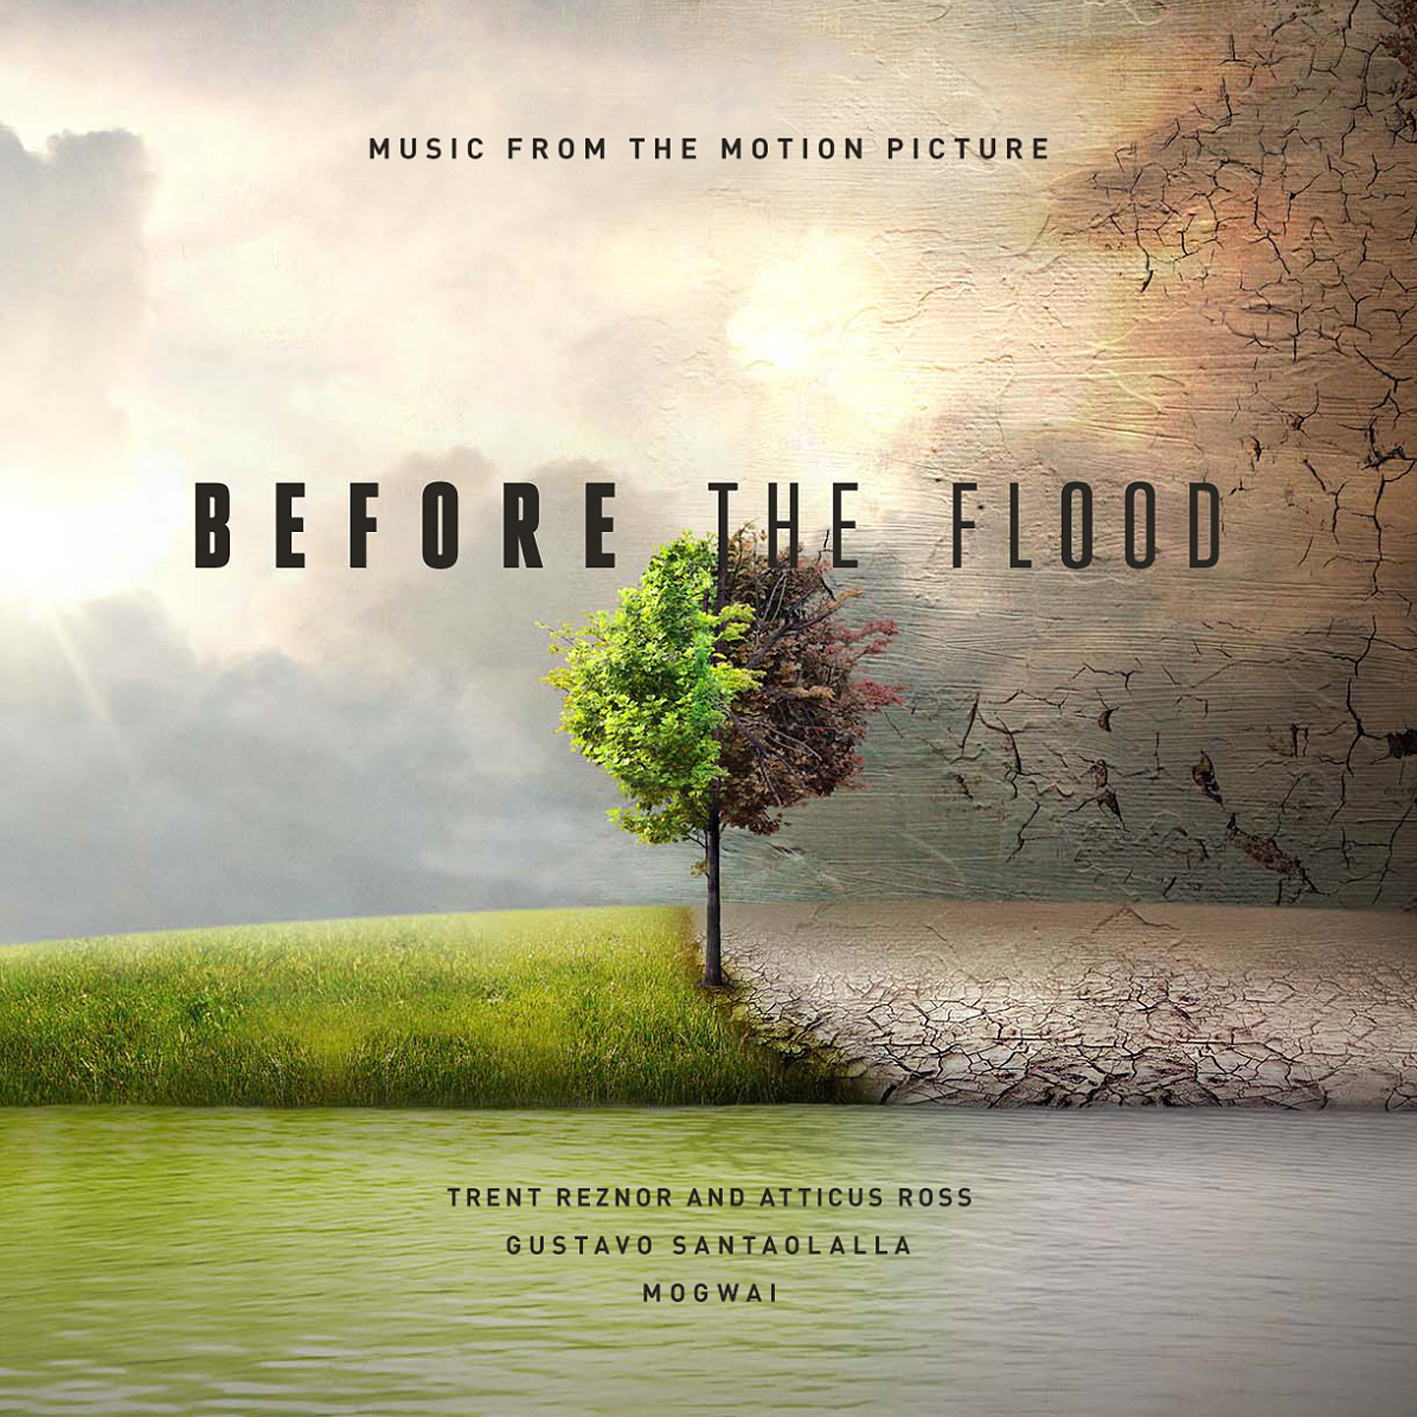 Trent Reznor & Atticus Ross, Gustavo Santaolalla, Mogwai - Before The Flood (2016) [FLAC 24bit/48kHz]